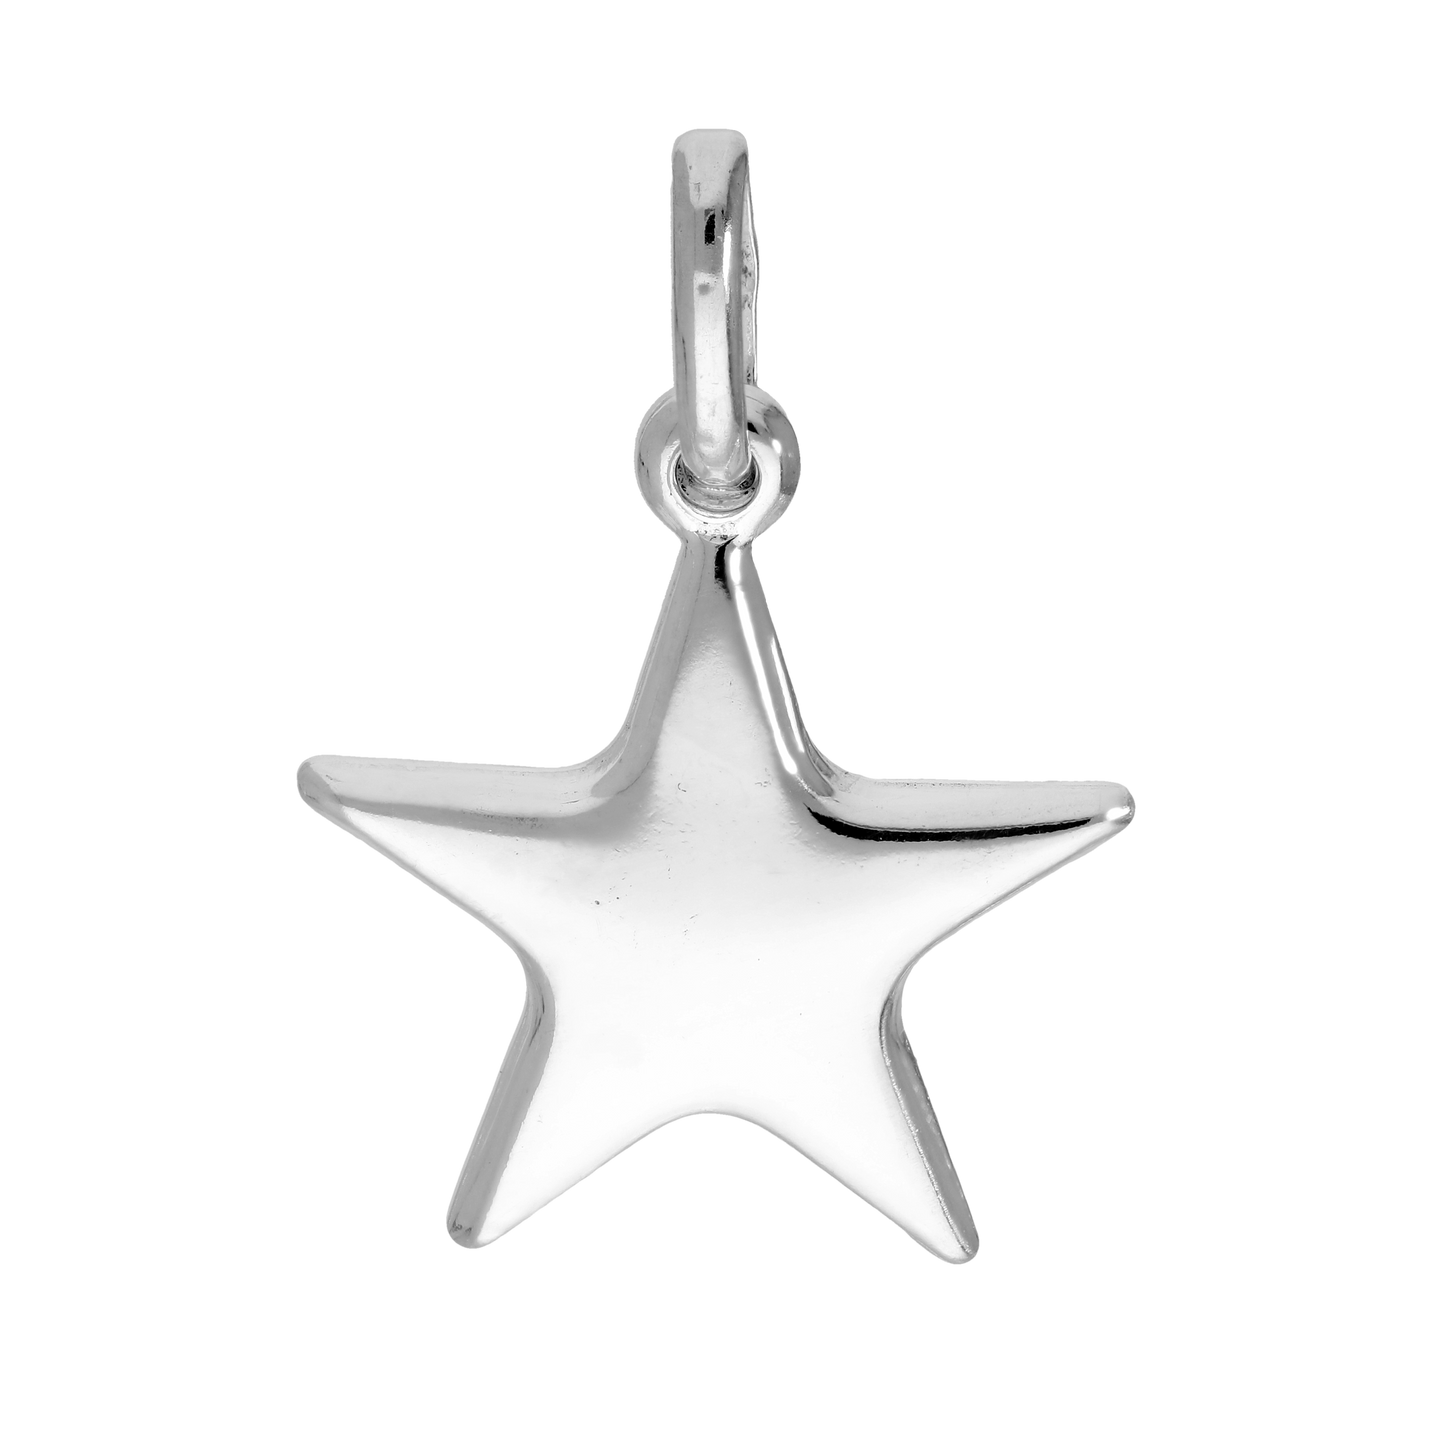 Sterling Silver Star Charm